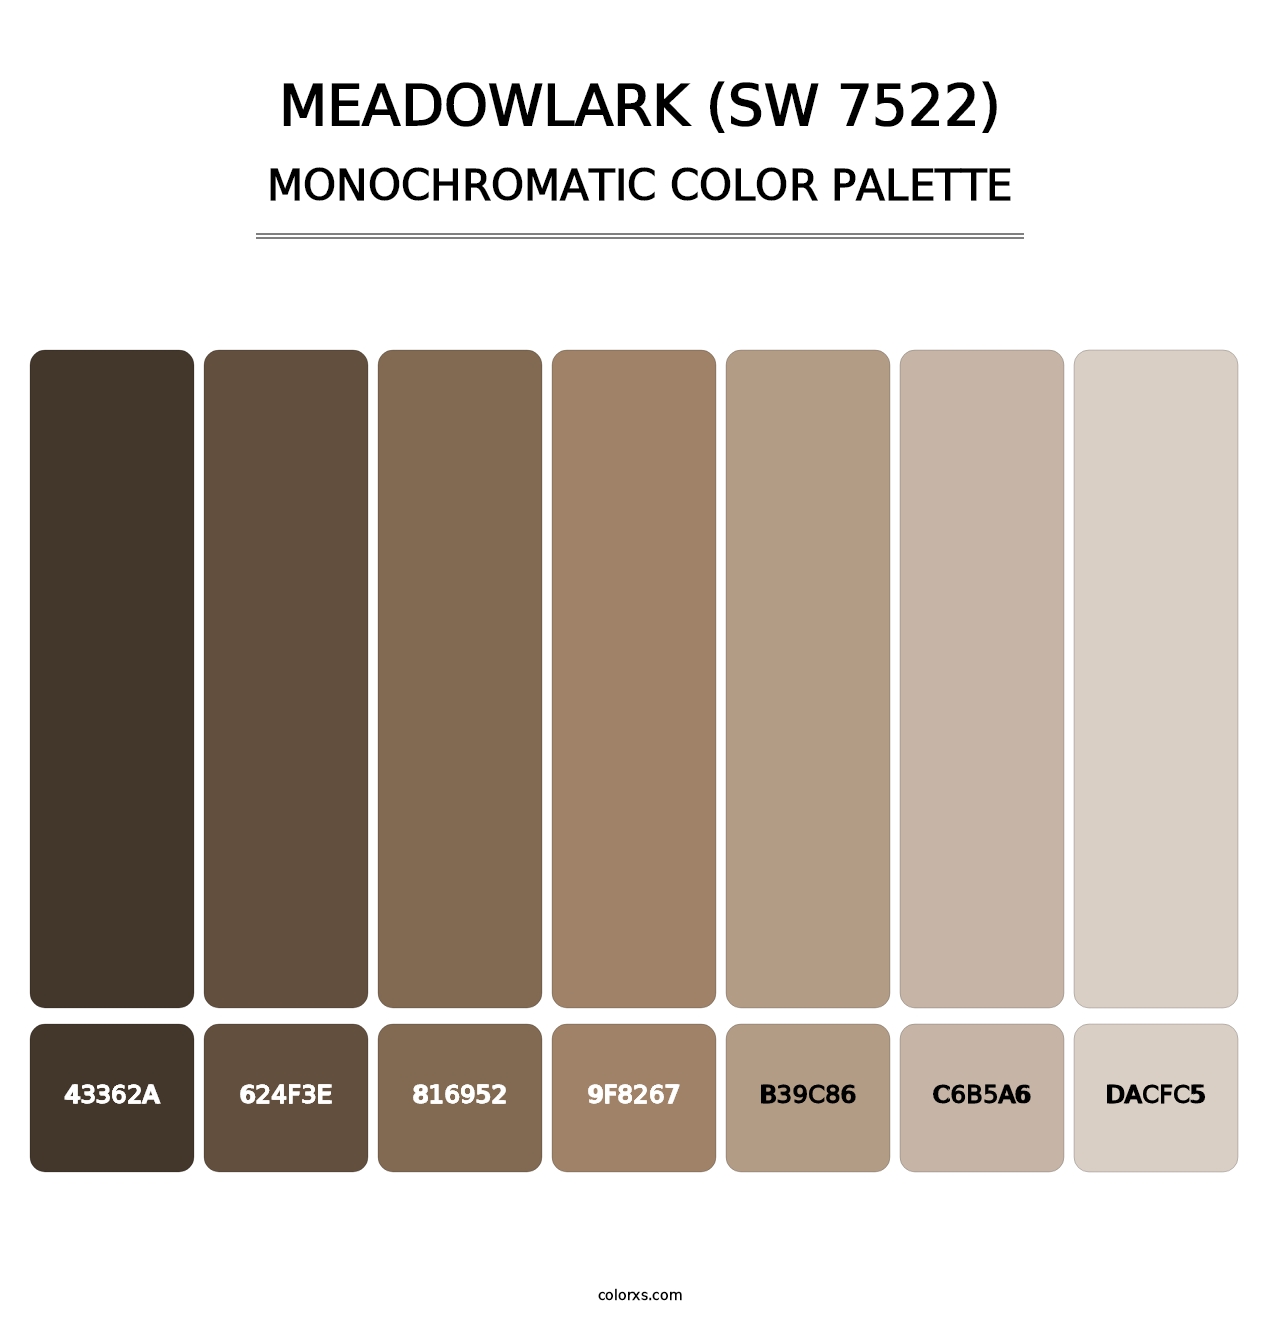 Meadowlark (SW 7522) - Monochromatic Color Palette